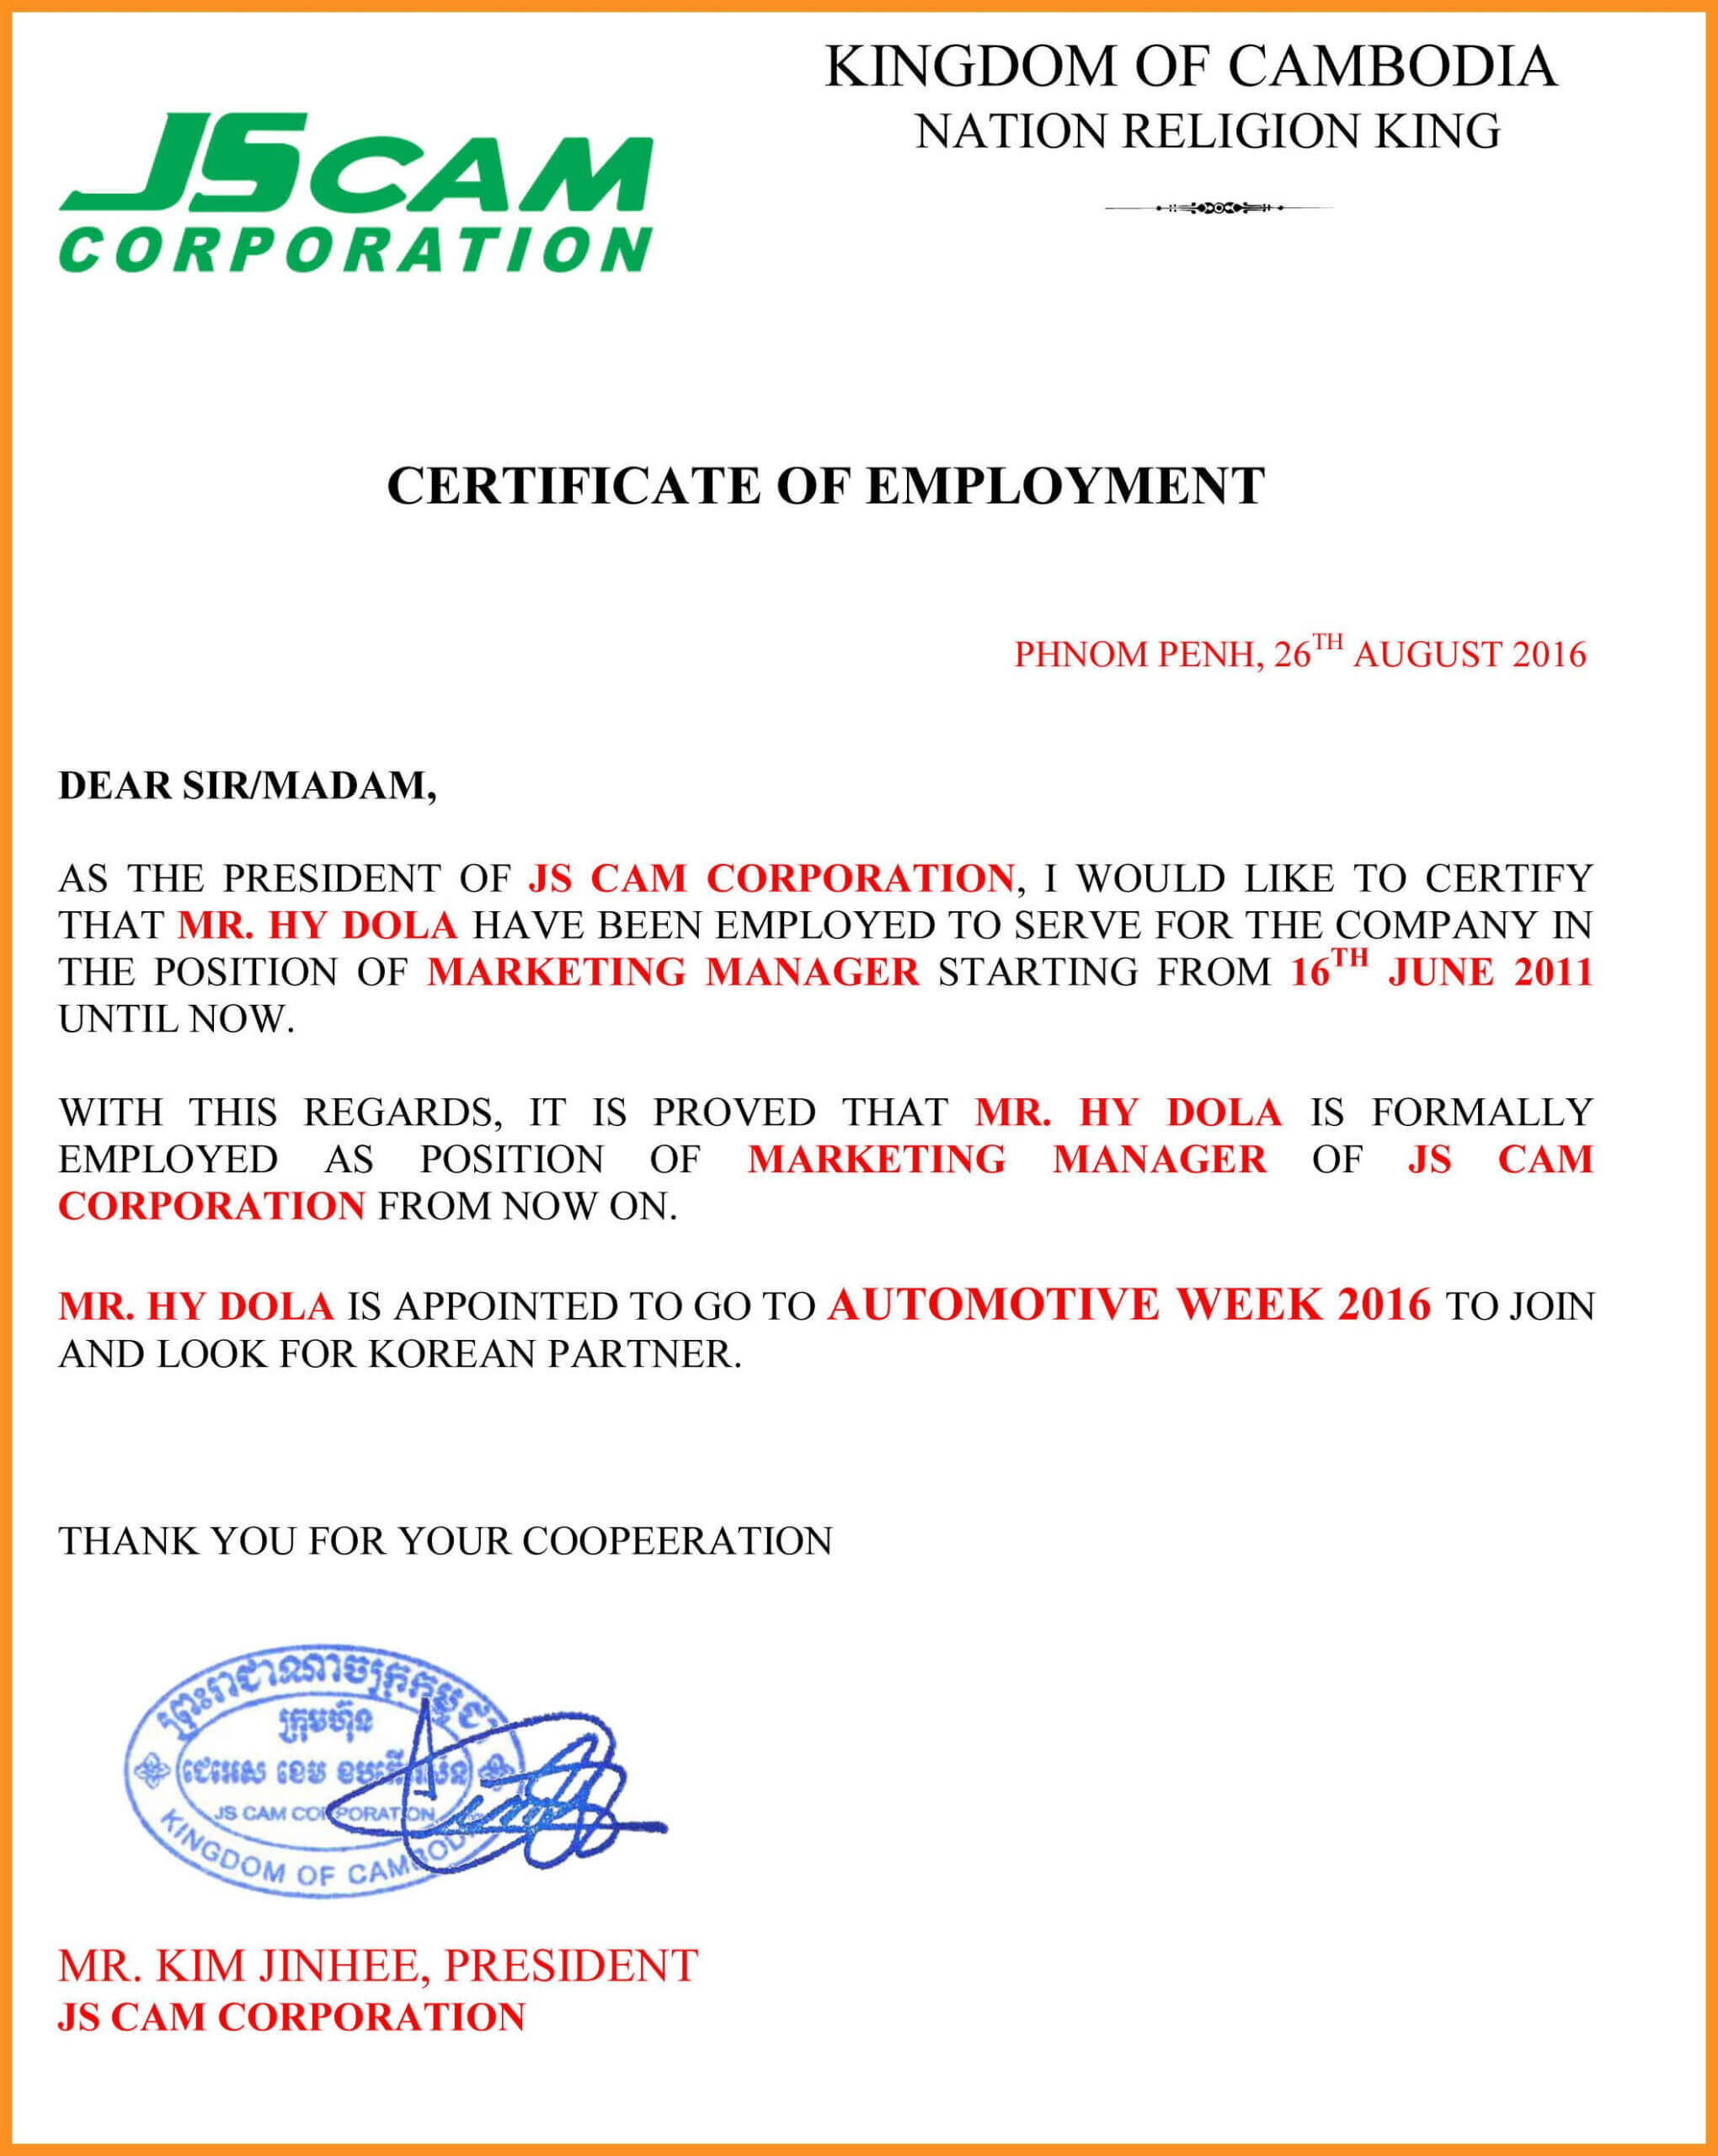 029 Certificate Of Employment Template Impressive Ideas Free With Certificate Of Employment Template